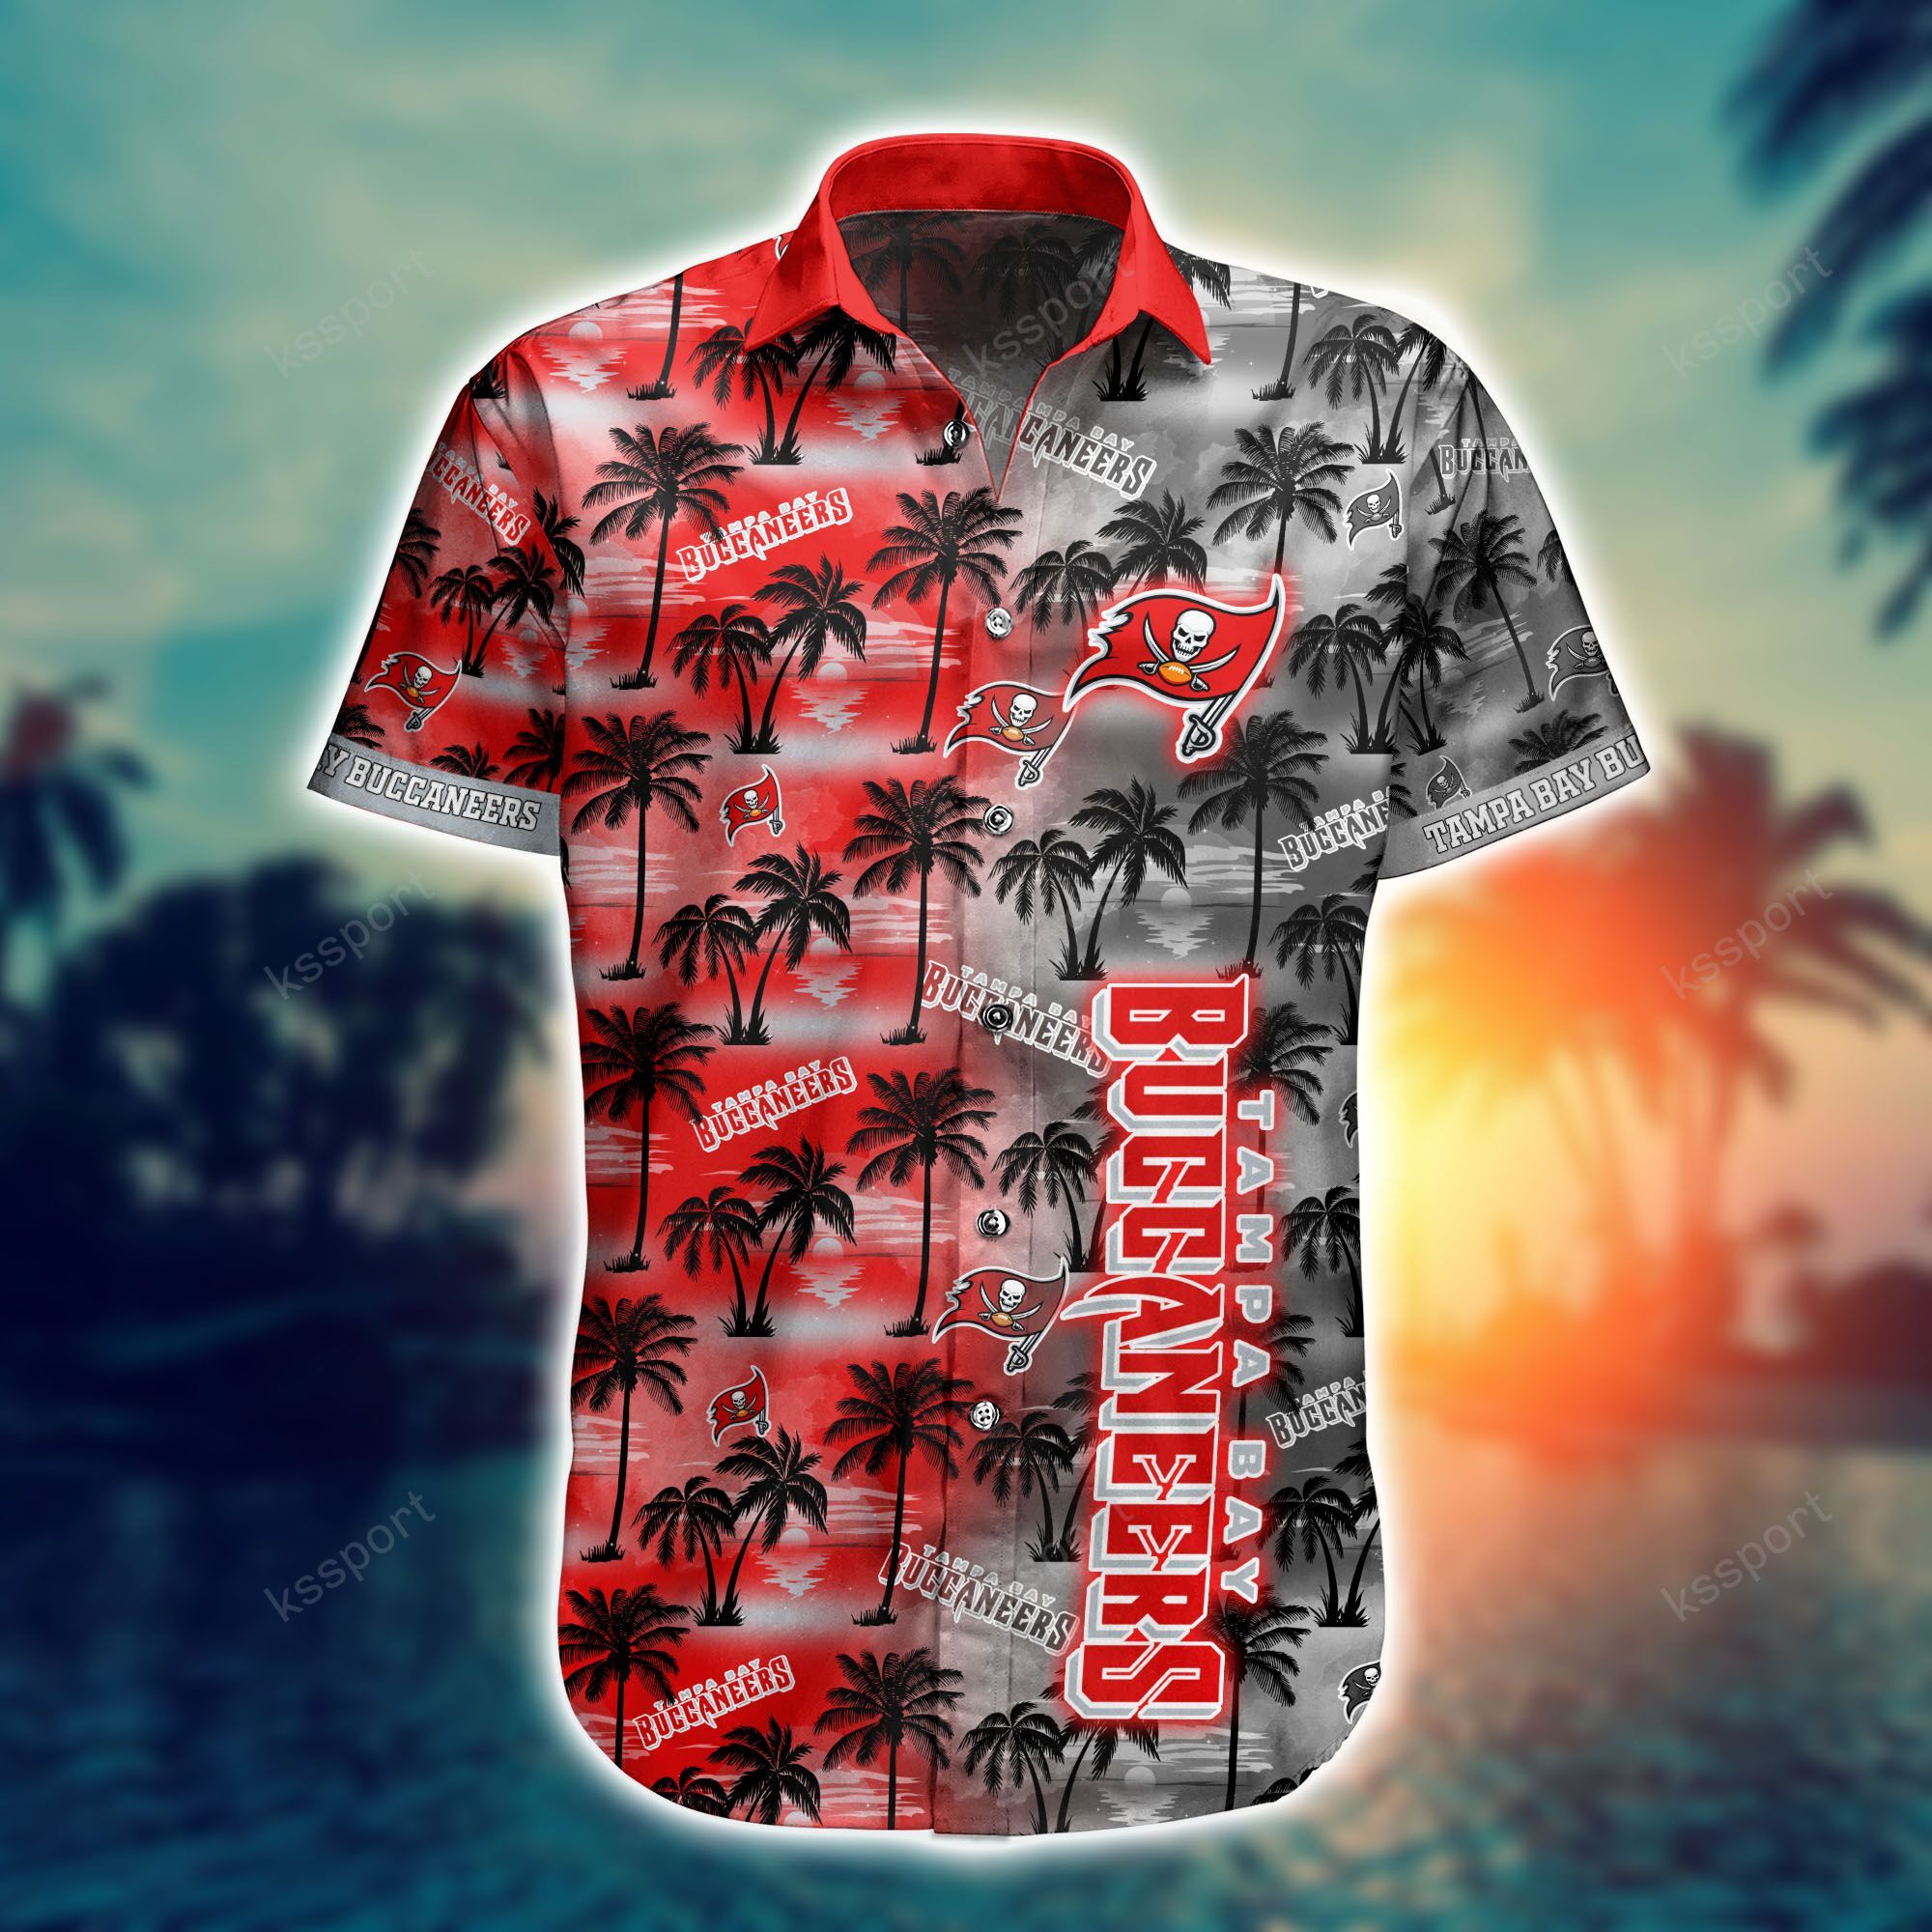 Hawaiian shirt and shorts is a great way to look stylish at a beach party 130